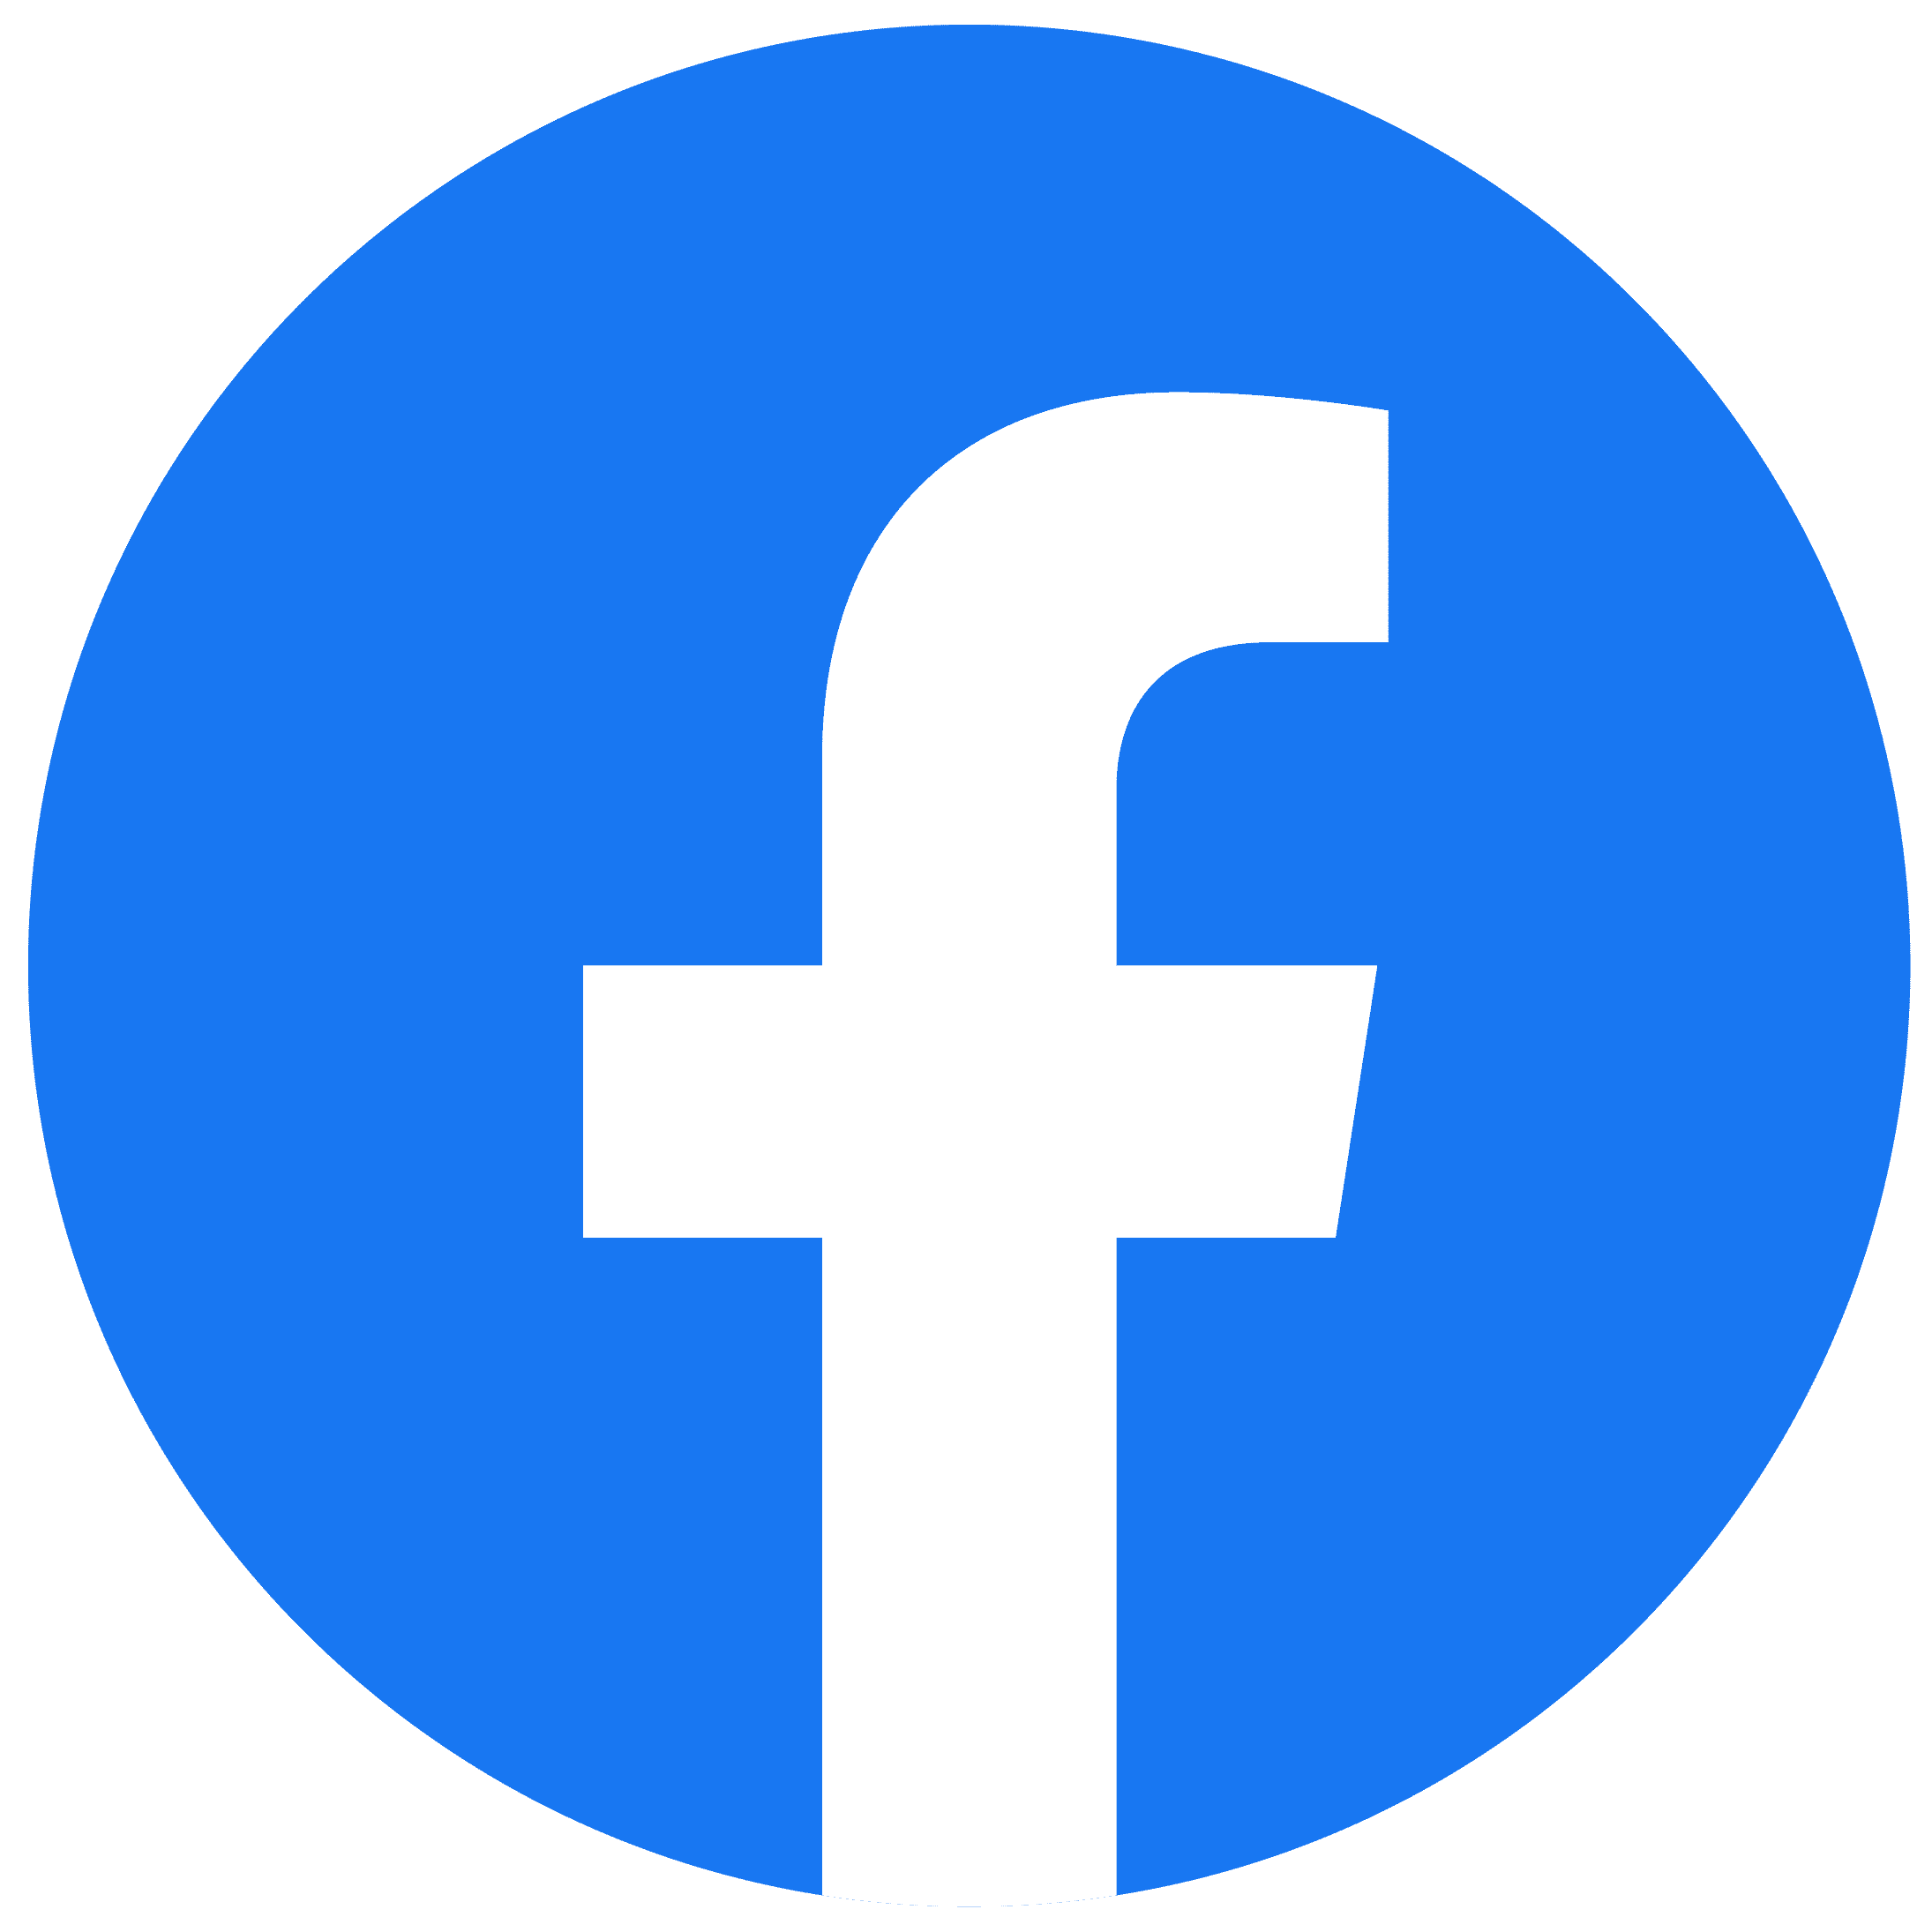 Facebook logo: a white lowercase 'f' inside a blue circle.